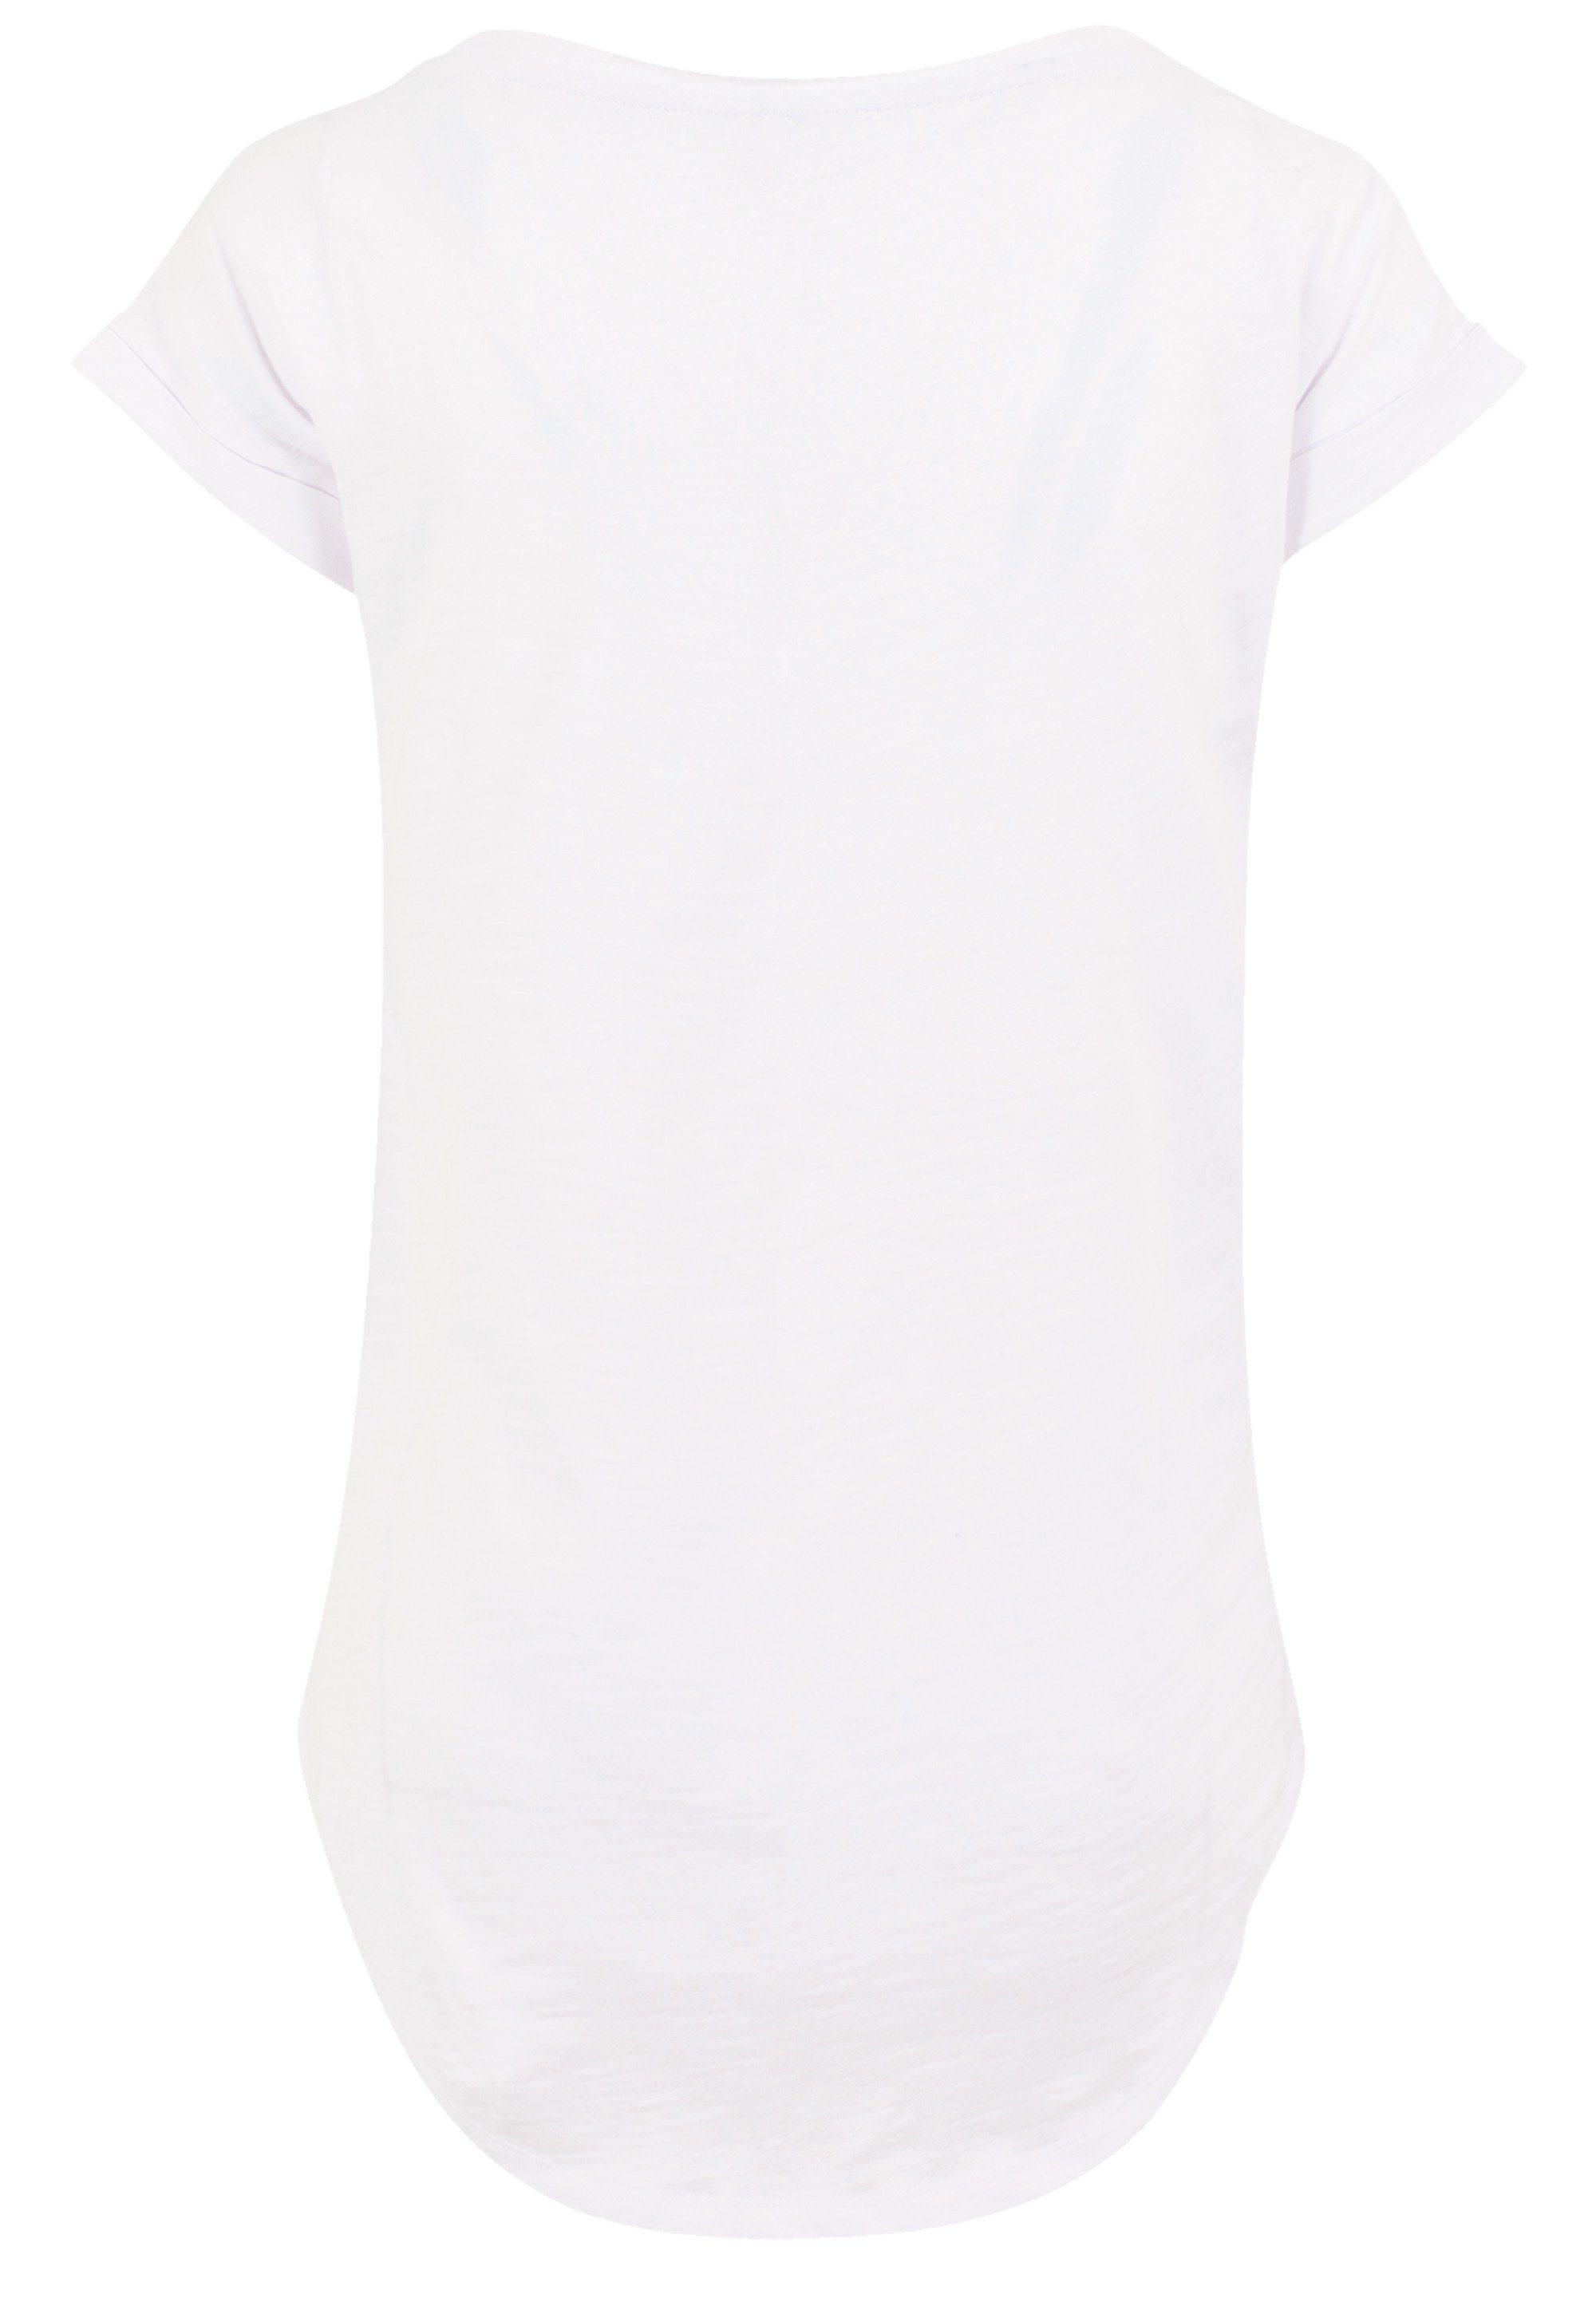 F4NT4STIC T-Shirt Star Wars Vintage Pride Premium Qualität, Hinten extra  lang geschnittenes Damen T-Shirt | T-Shirts